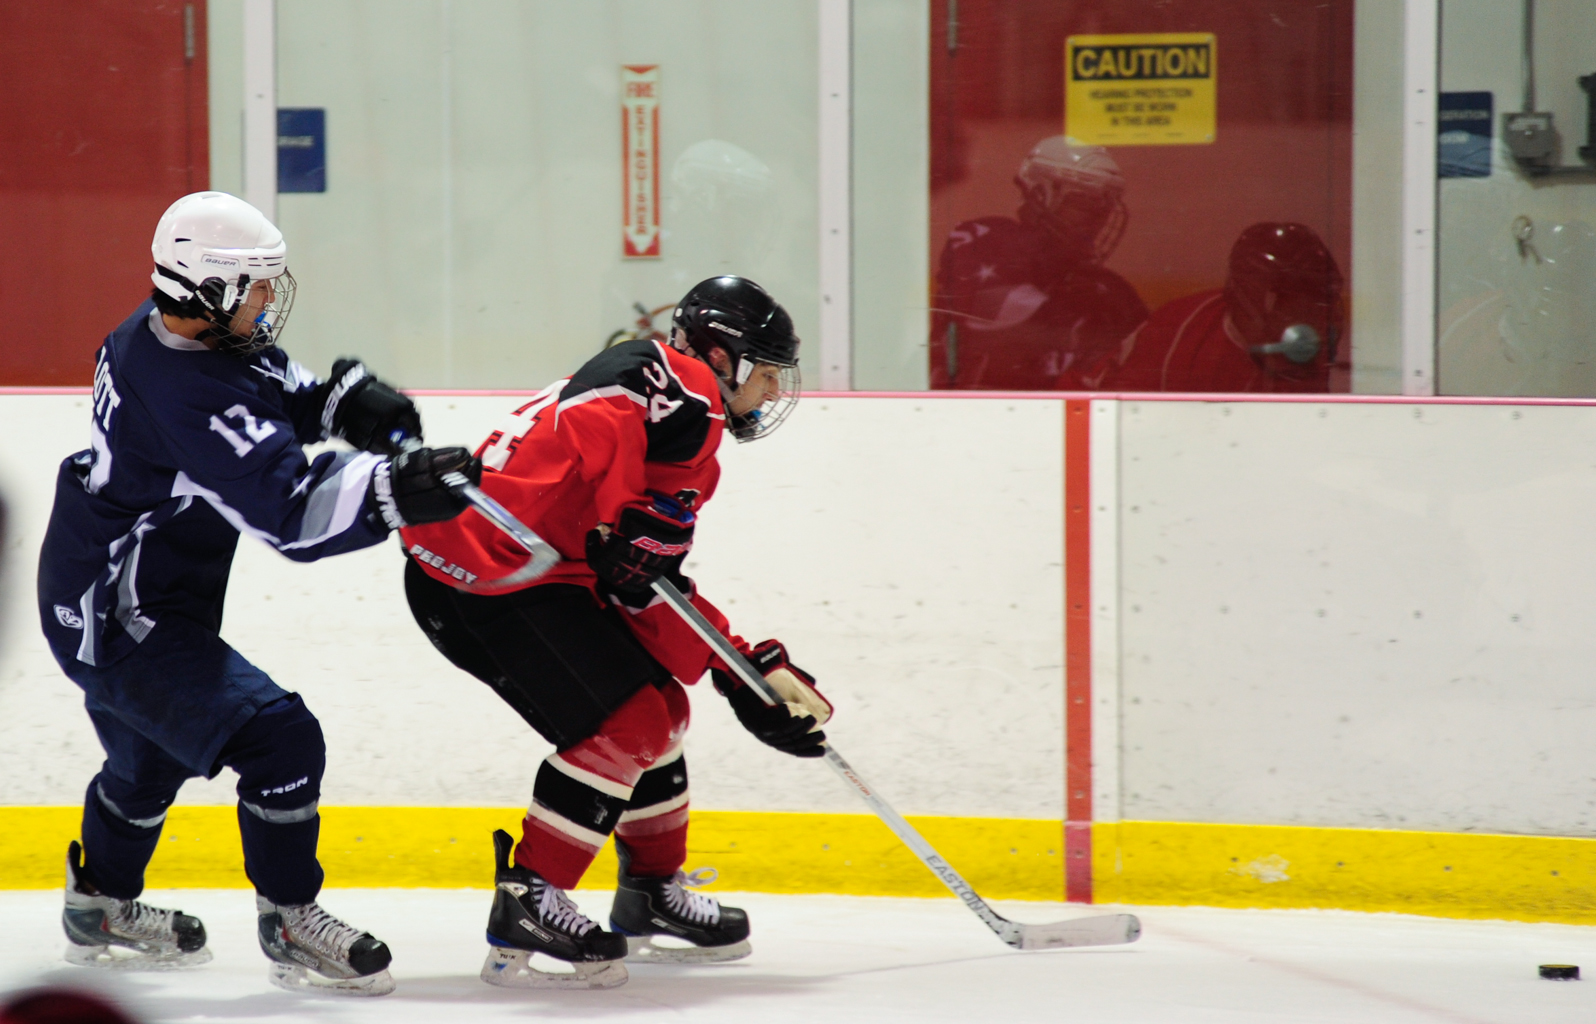 JDHS falls to Soldotna in high school hockey